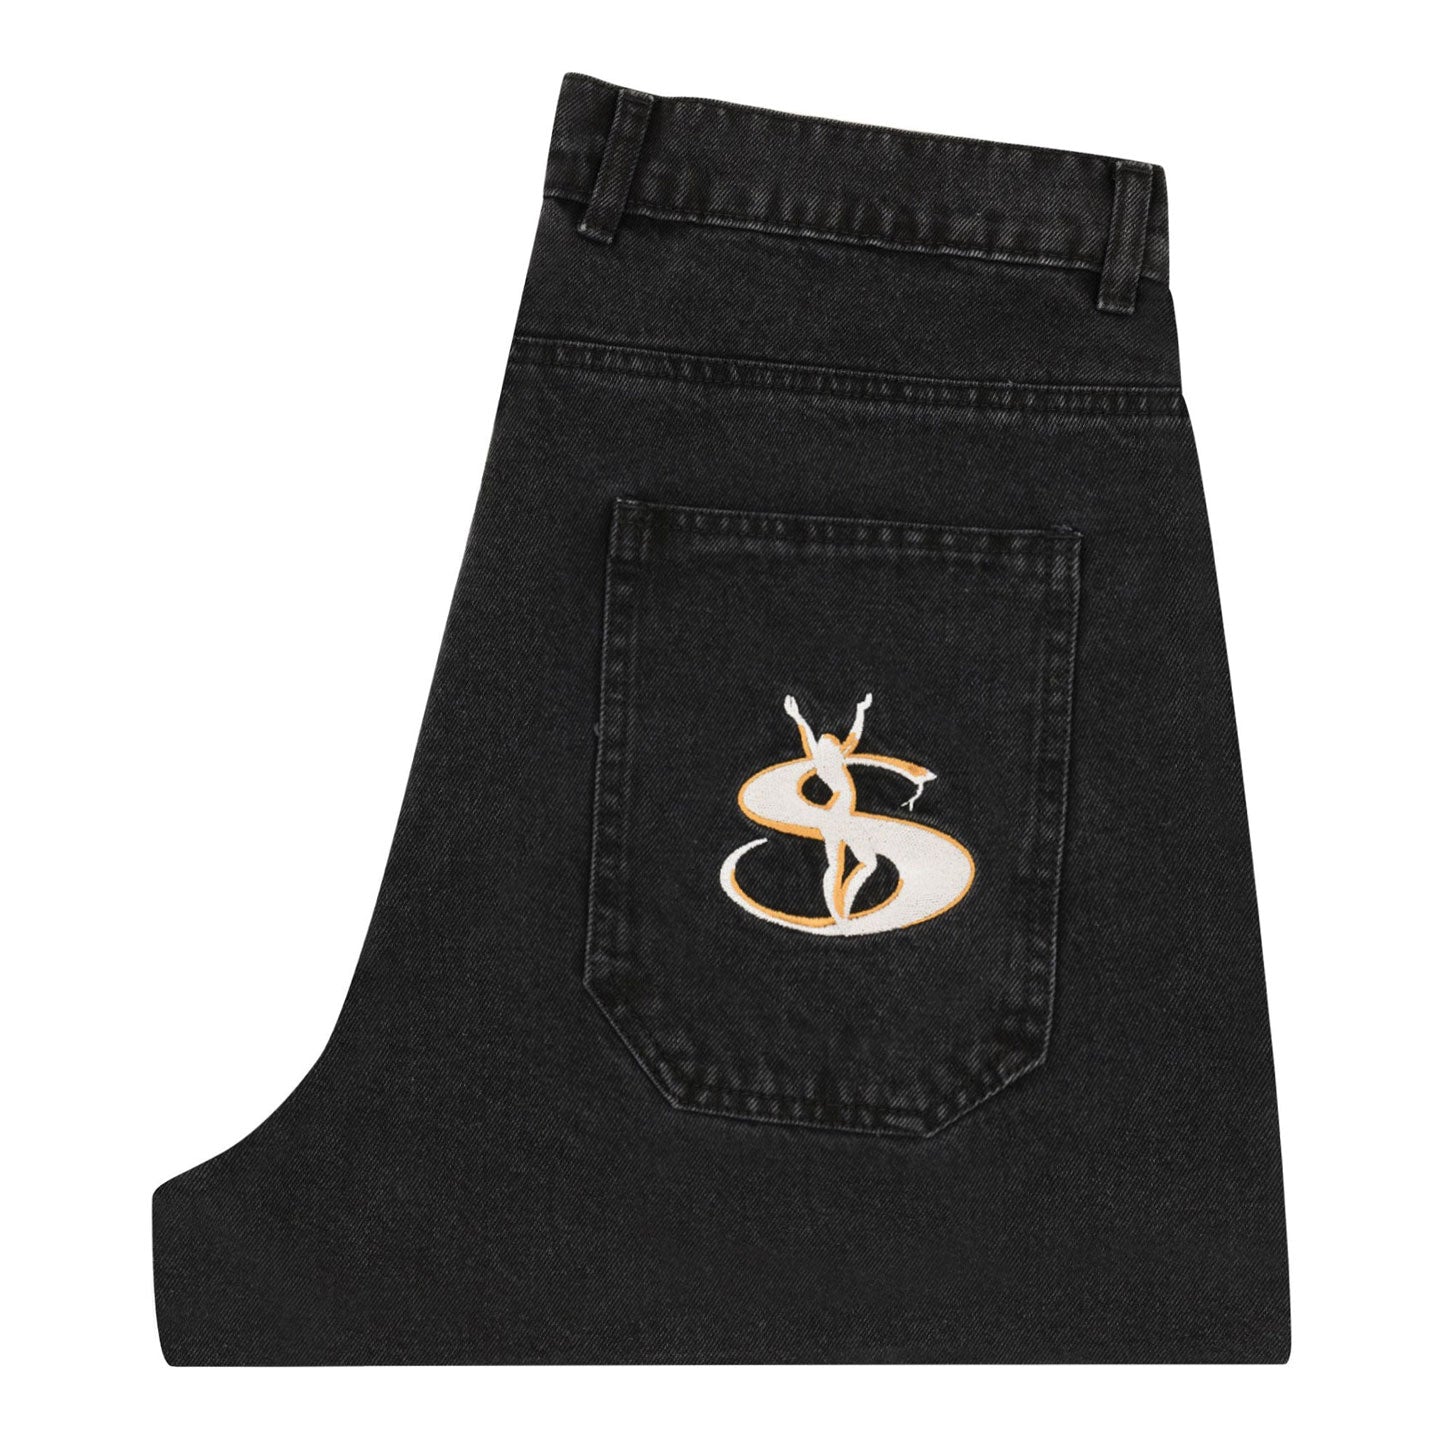 Yardsale Phantasy Jeans black supremepolospo